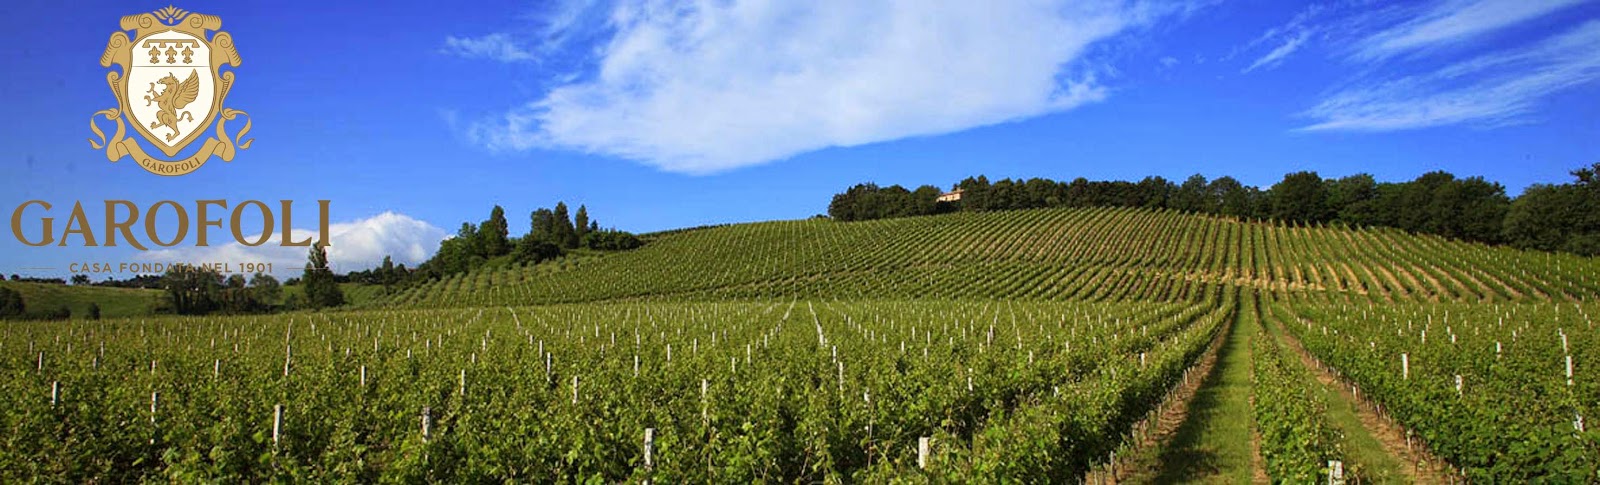 Garofoli vineyards in Le March